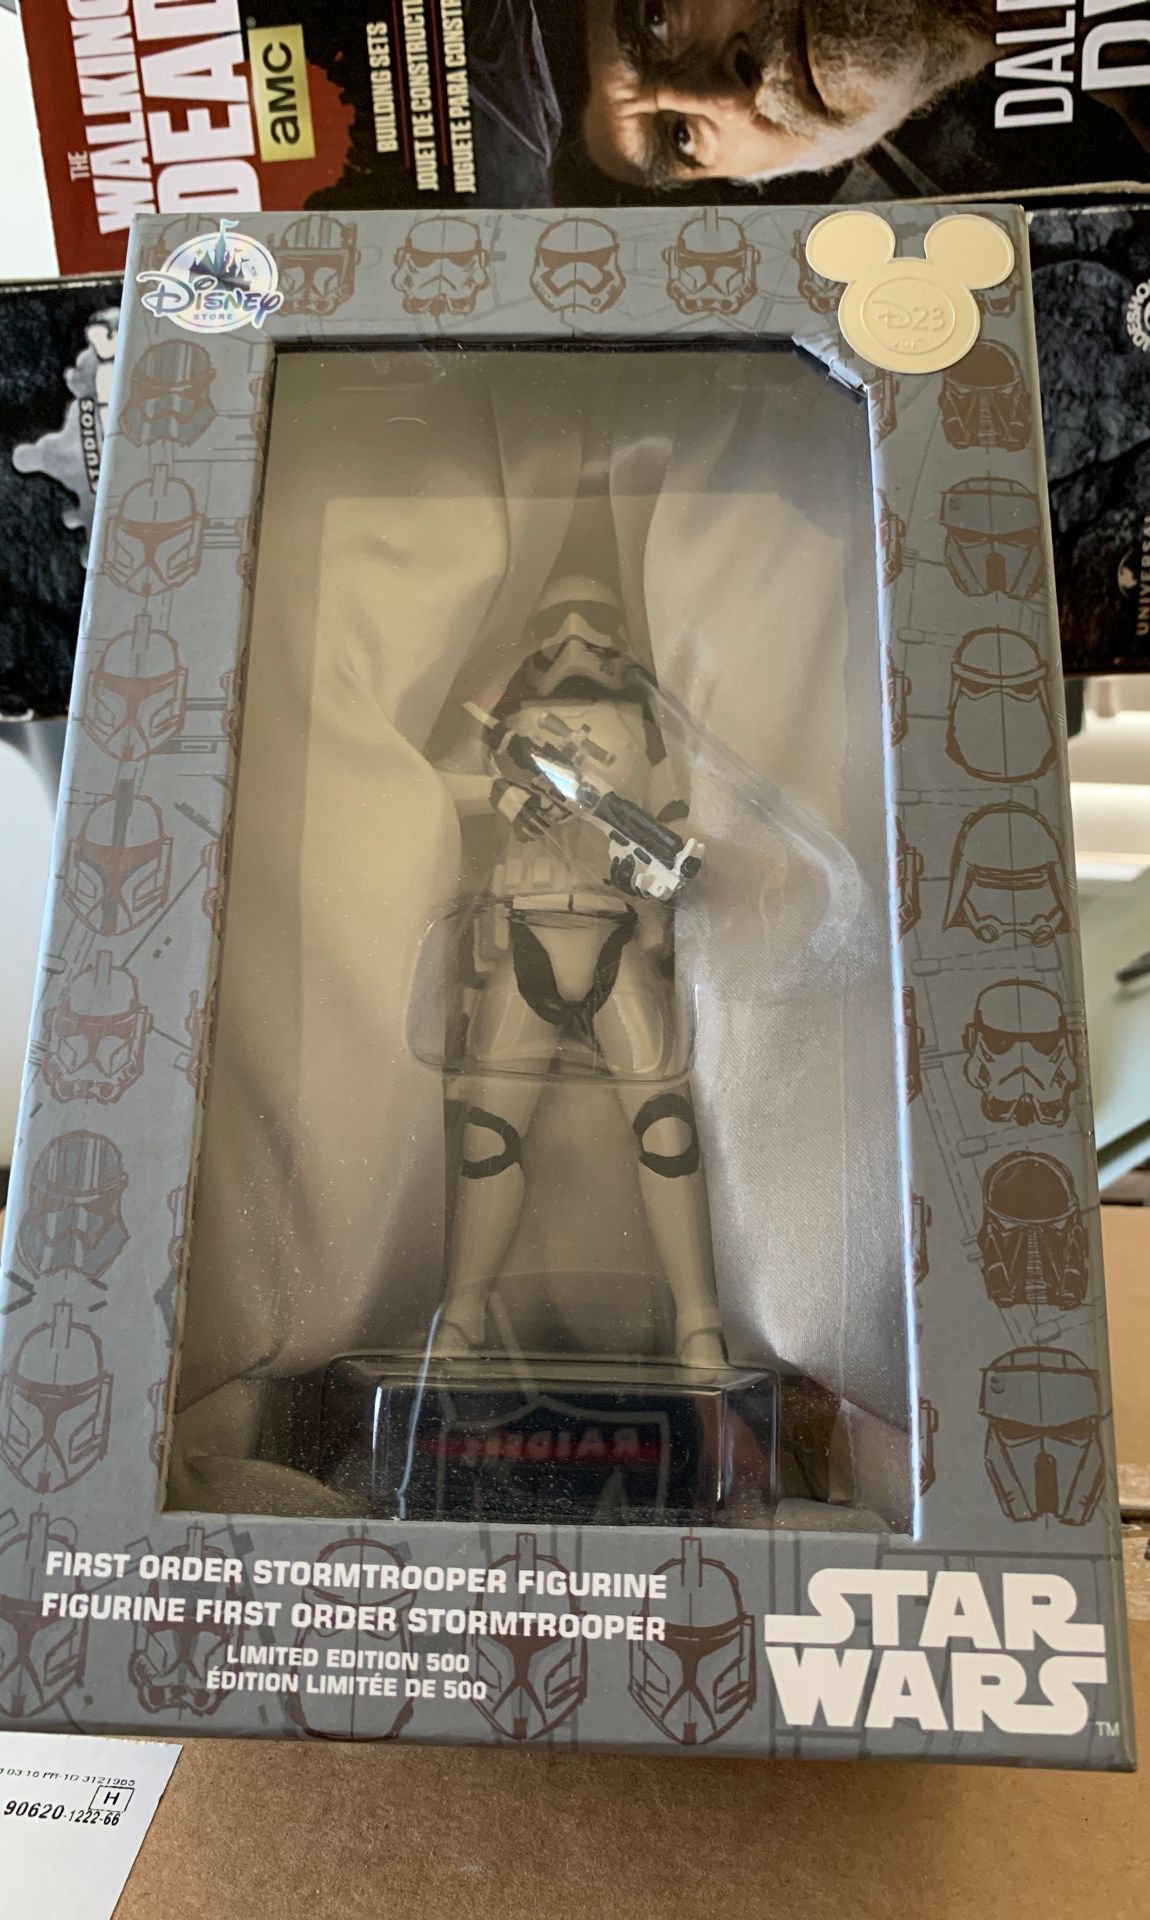 Star Wars D23 2017 First Order Stormtrooper Figurine LE 500